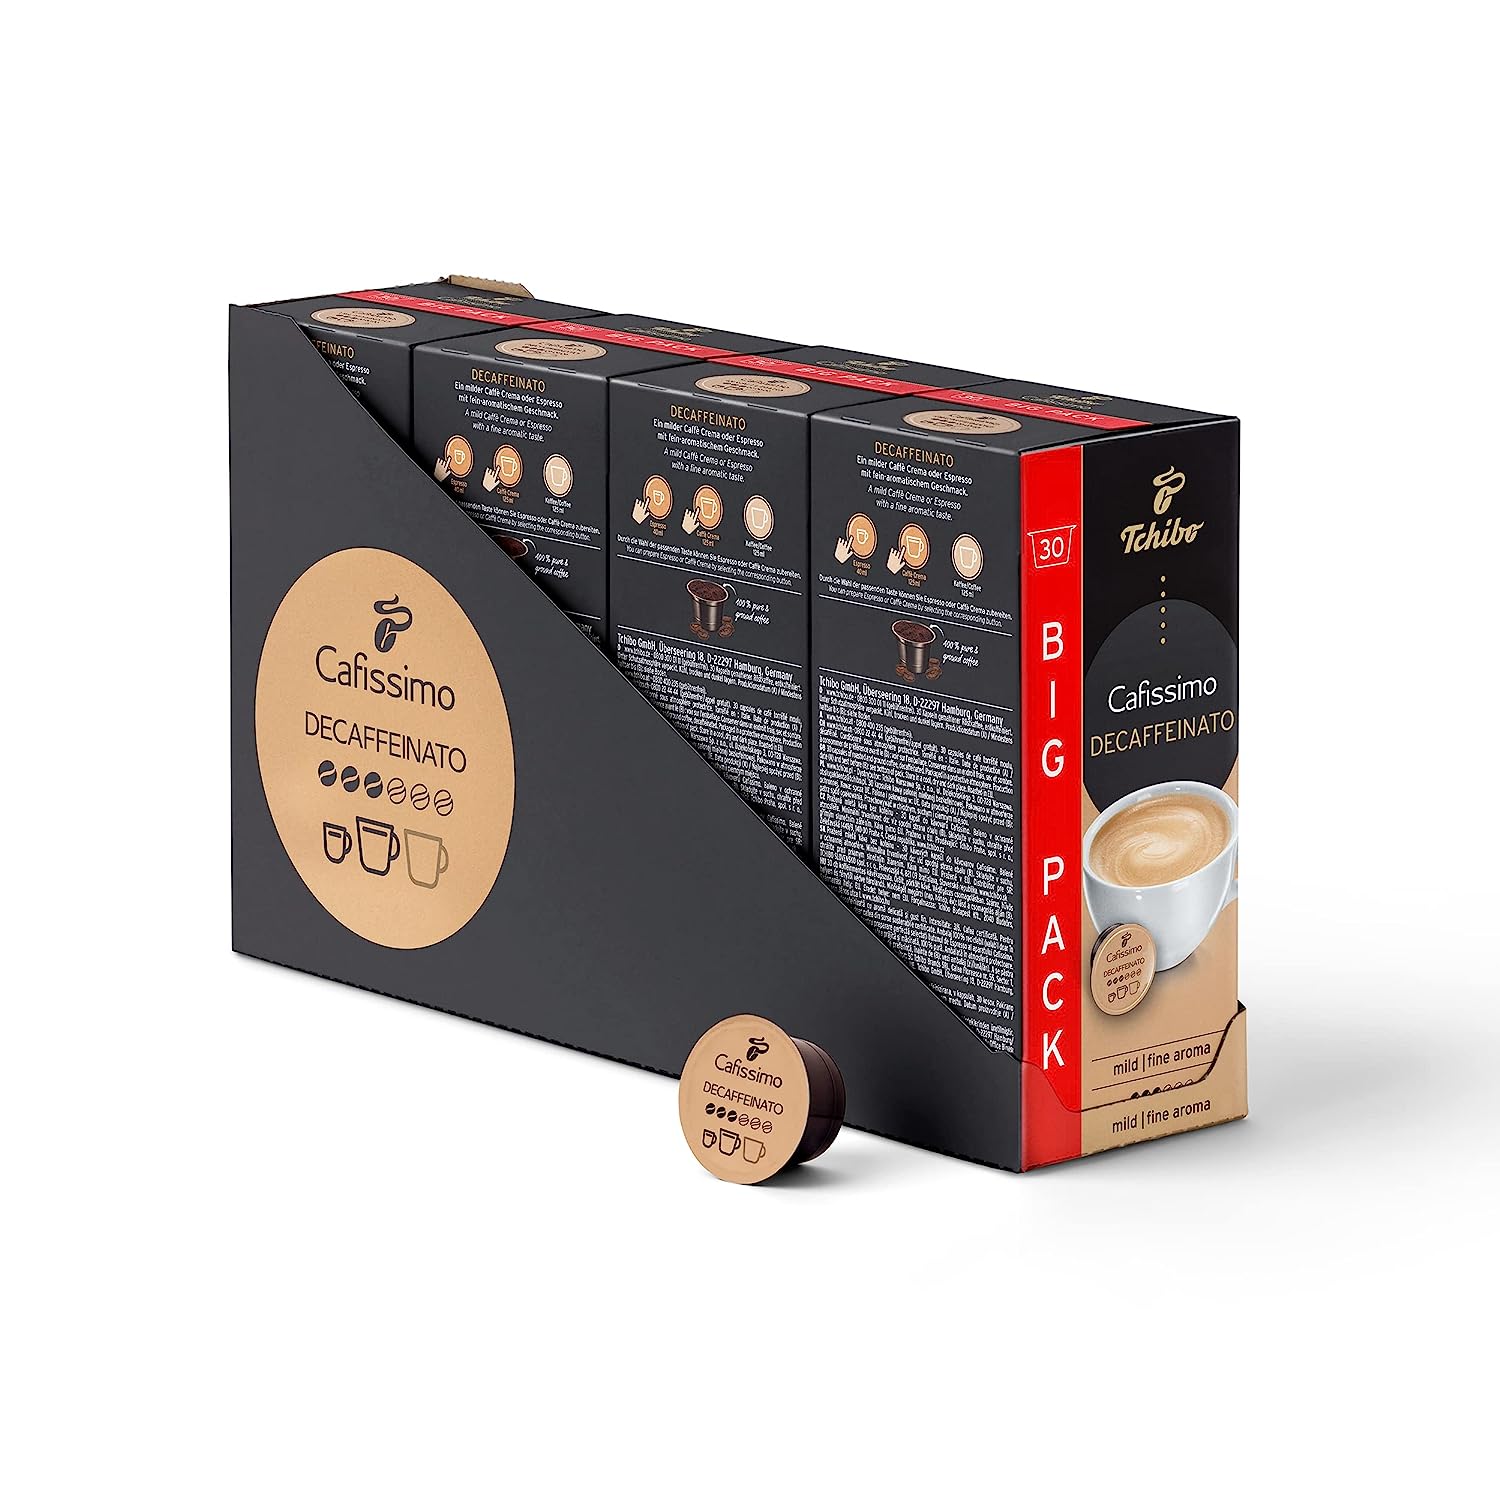 Tchibo Cafissimo Caffè Crema decaffeinated coffee capsules, 120 pieces - 4x30 capsules (coffee, mild with a fine aroma), sustainable & fair trade